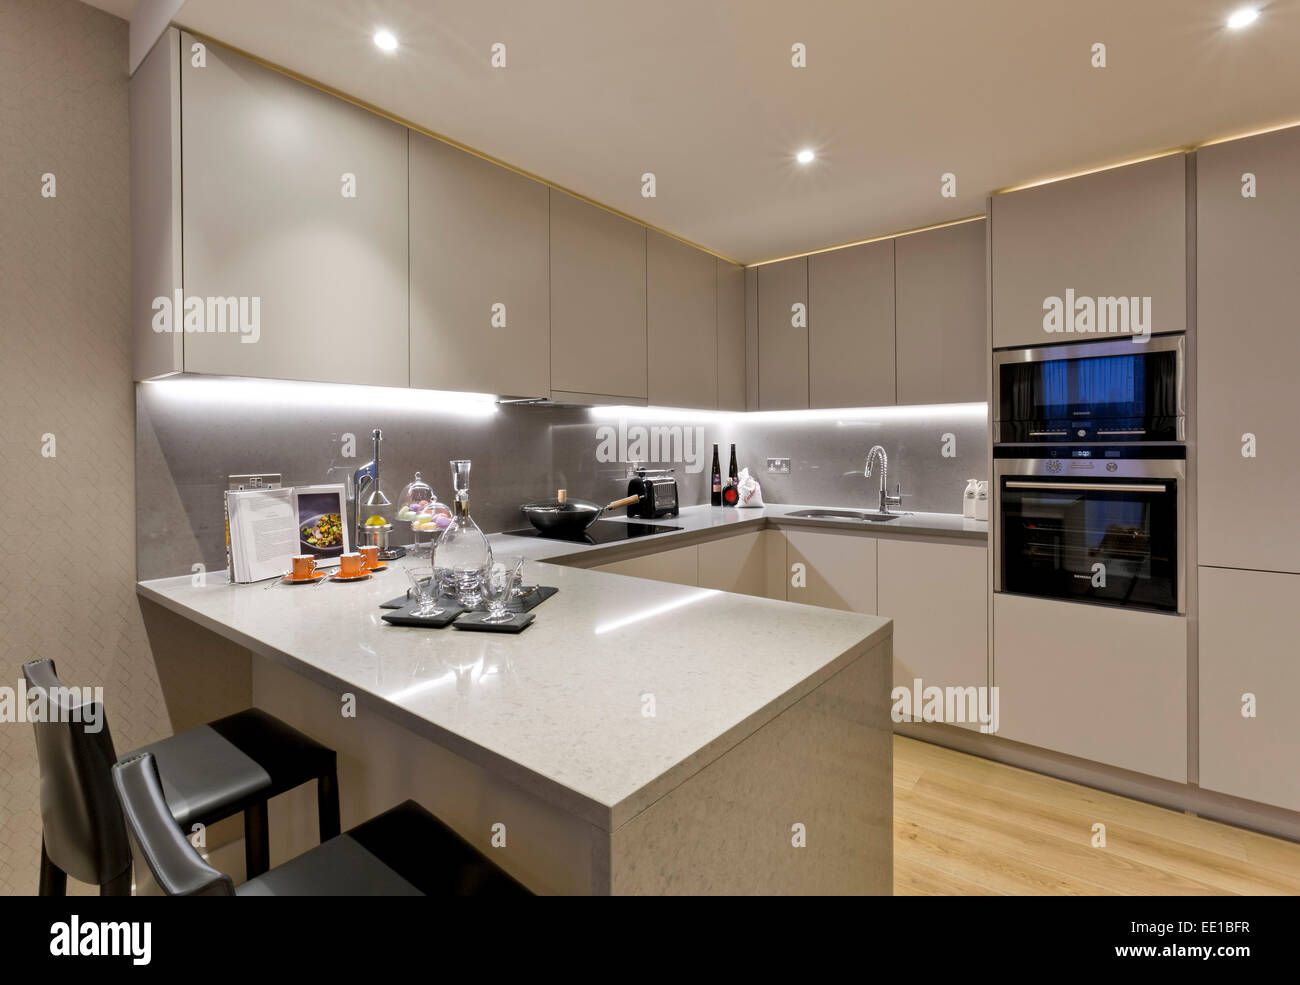 London Dock E1 Apartments Marketing Suite, London, United Kingdom. Architect: n/a, 2014. Kitchen. Stock Photo